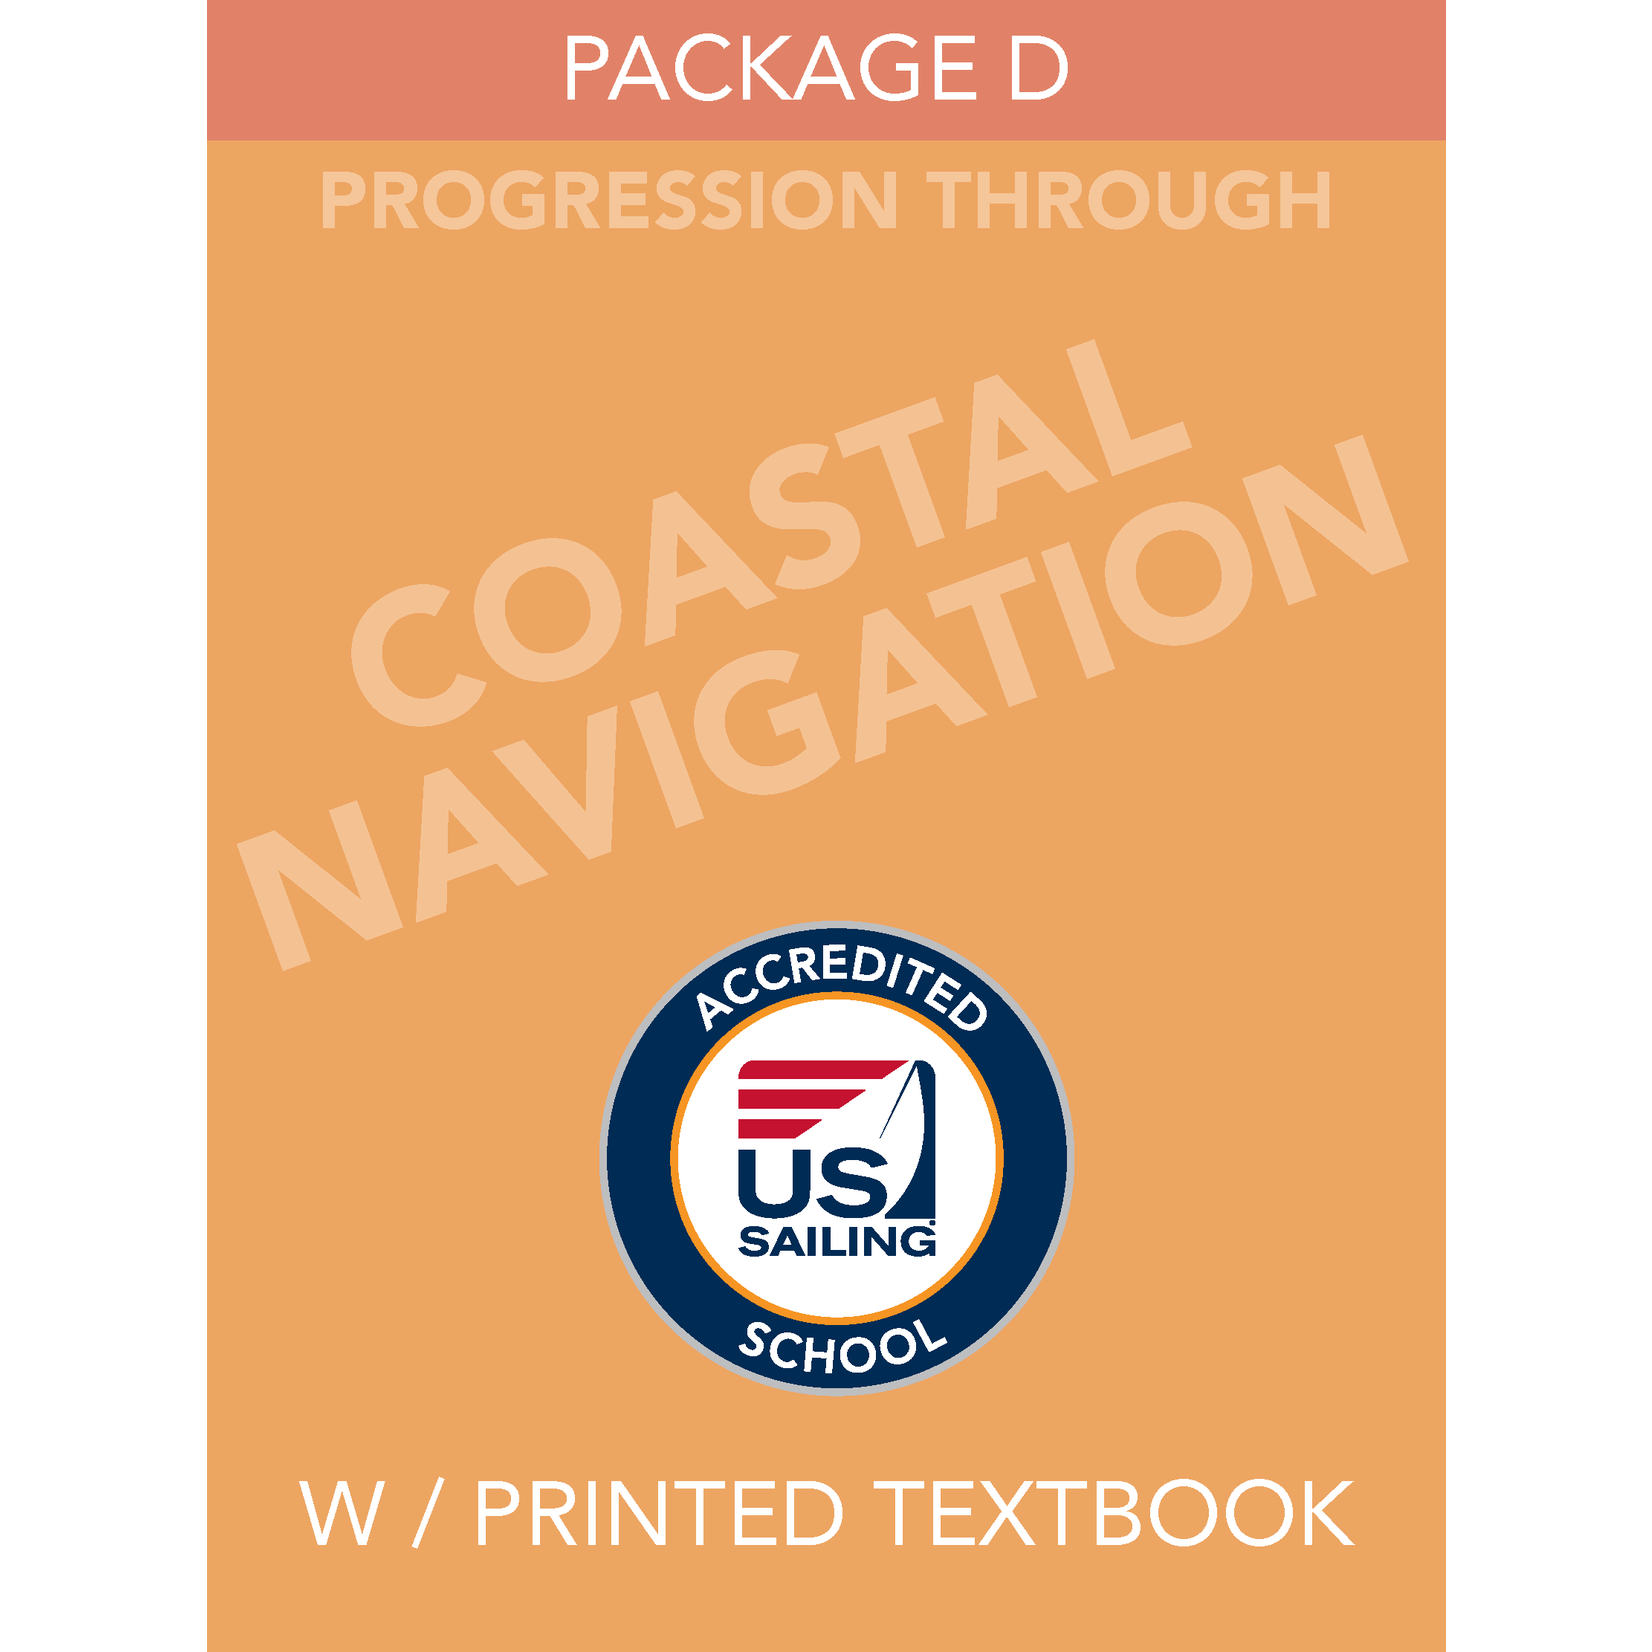 PACKAGE Package D - Coastal Navigation